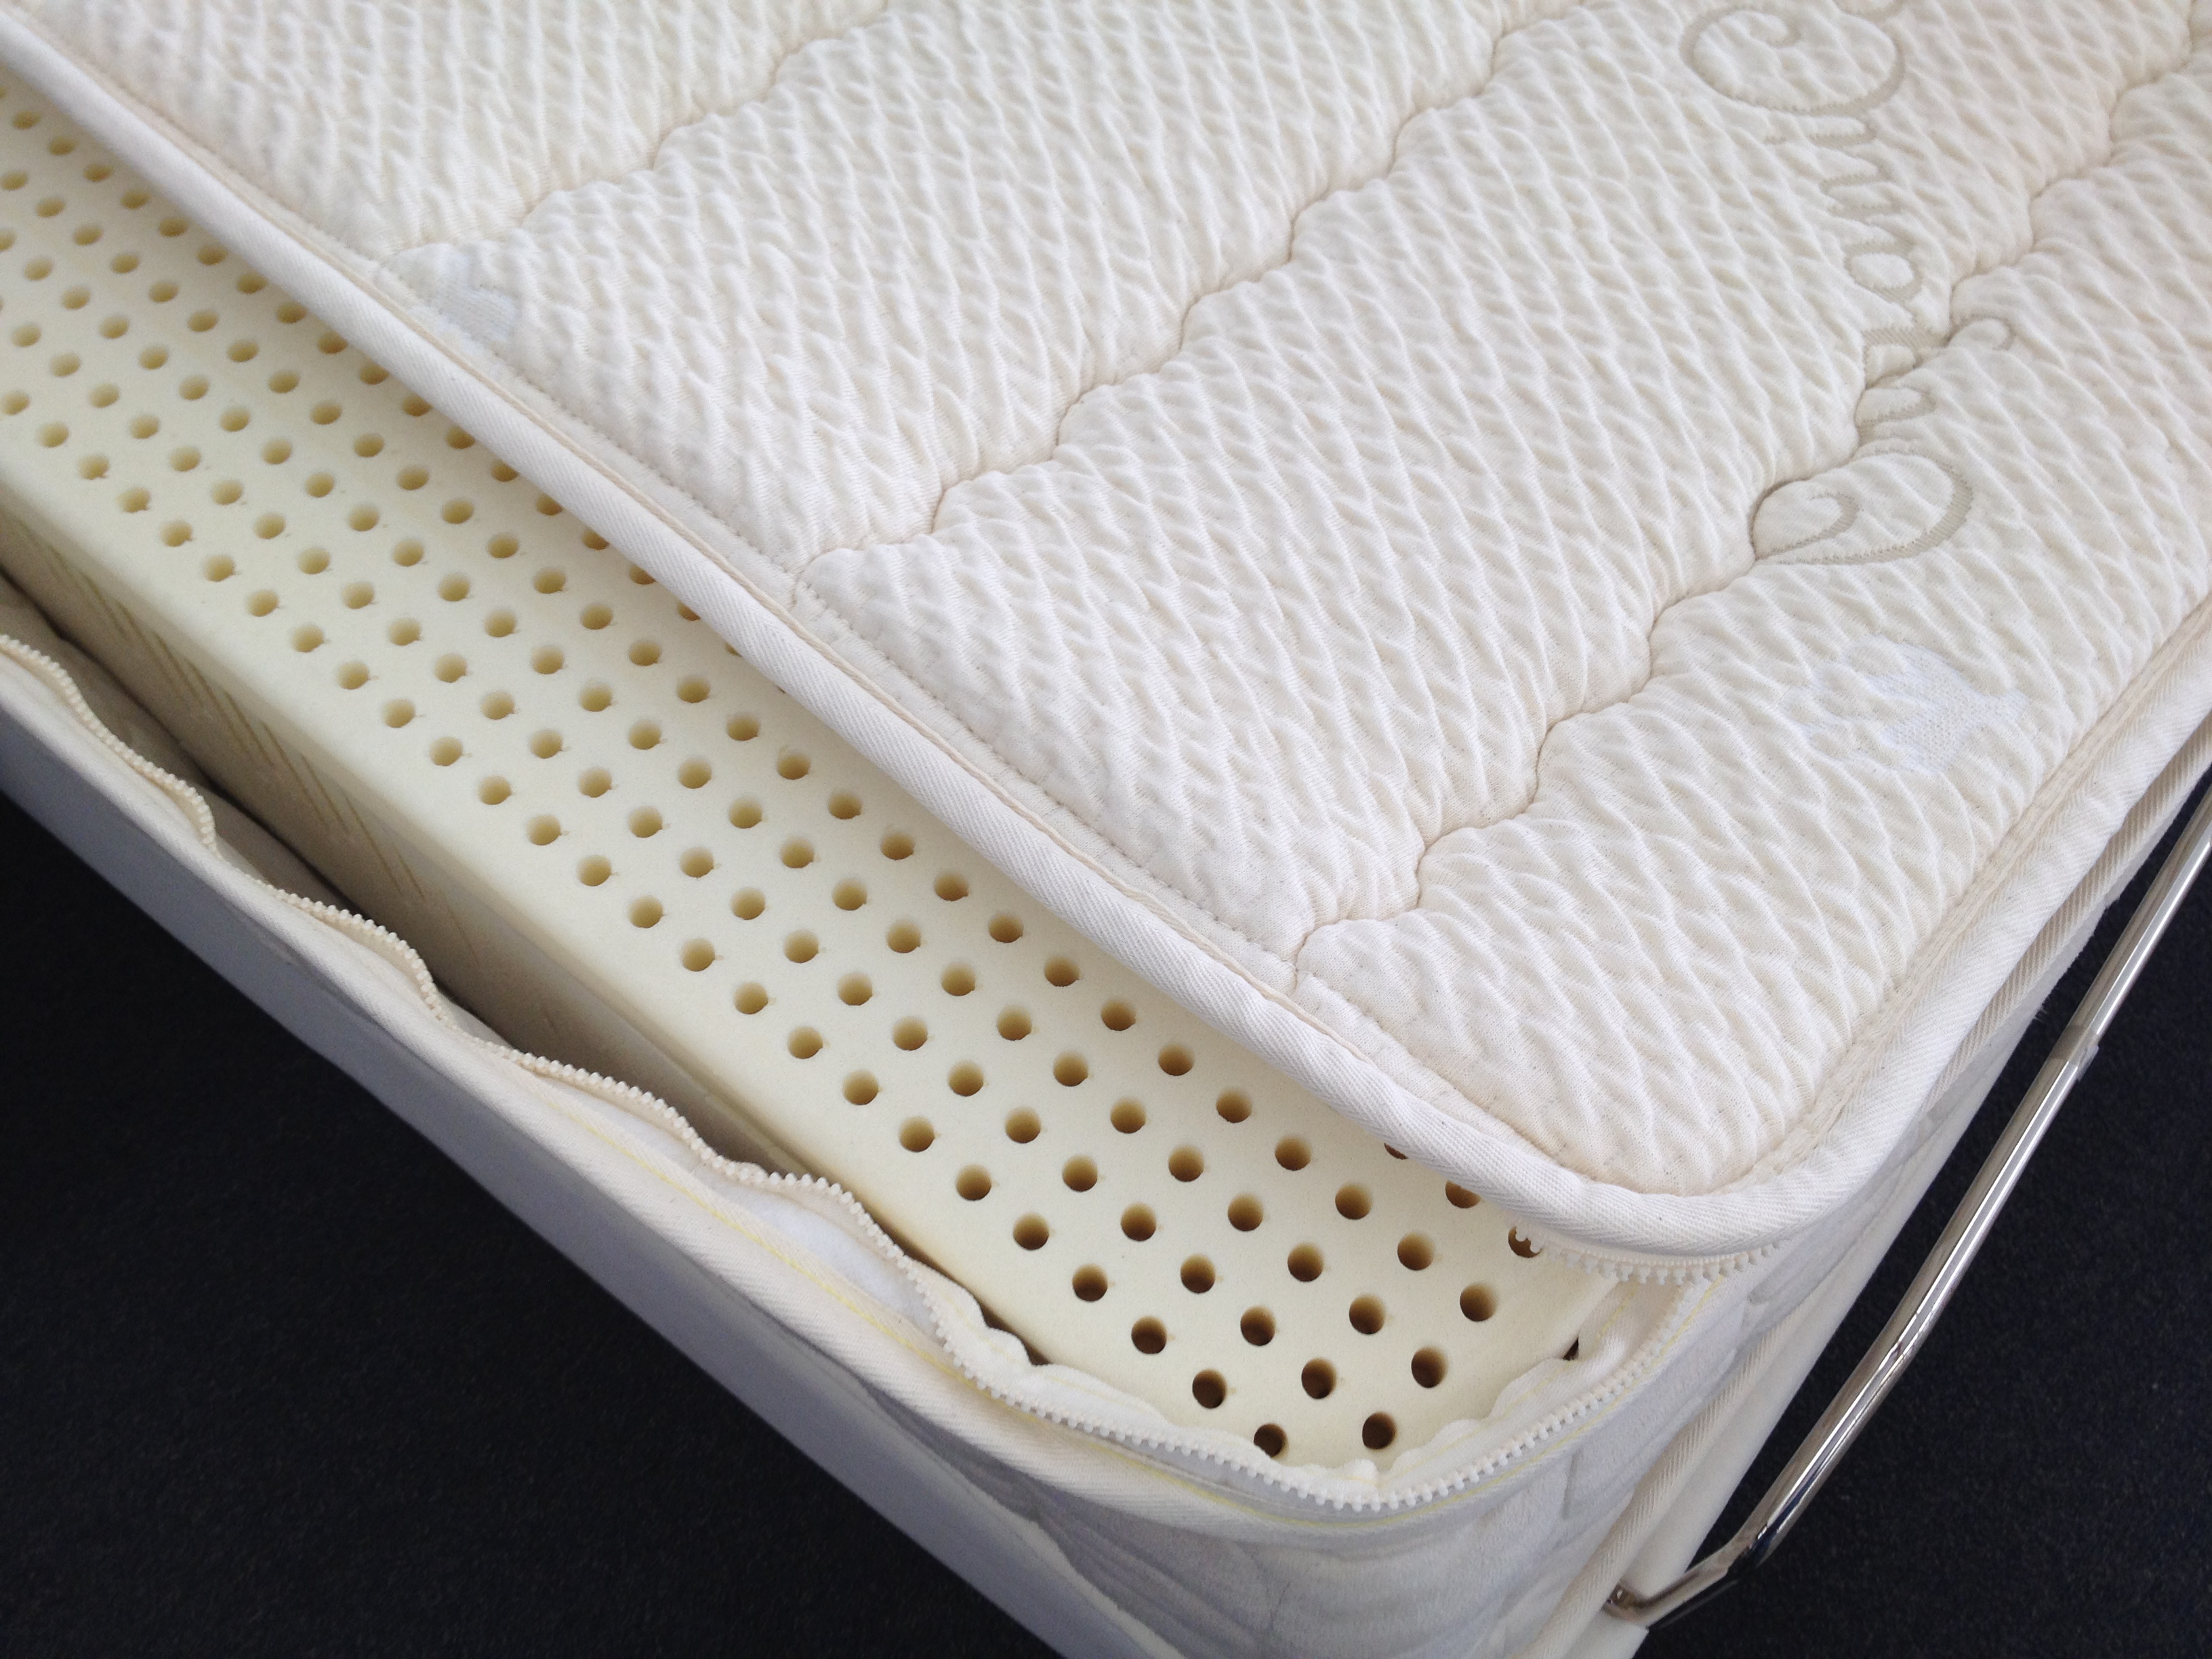 Glendale natural organic latex mattress